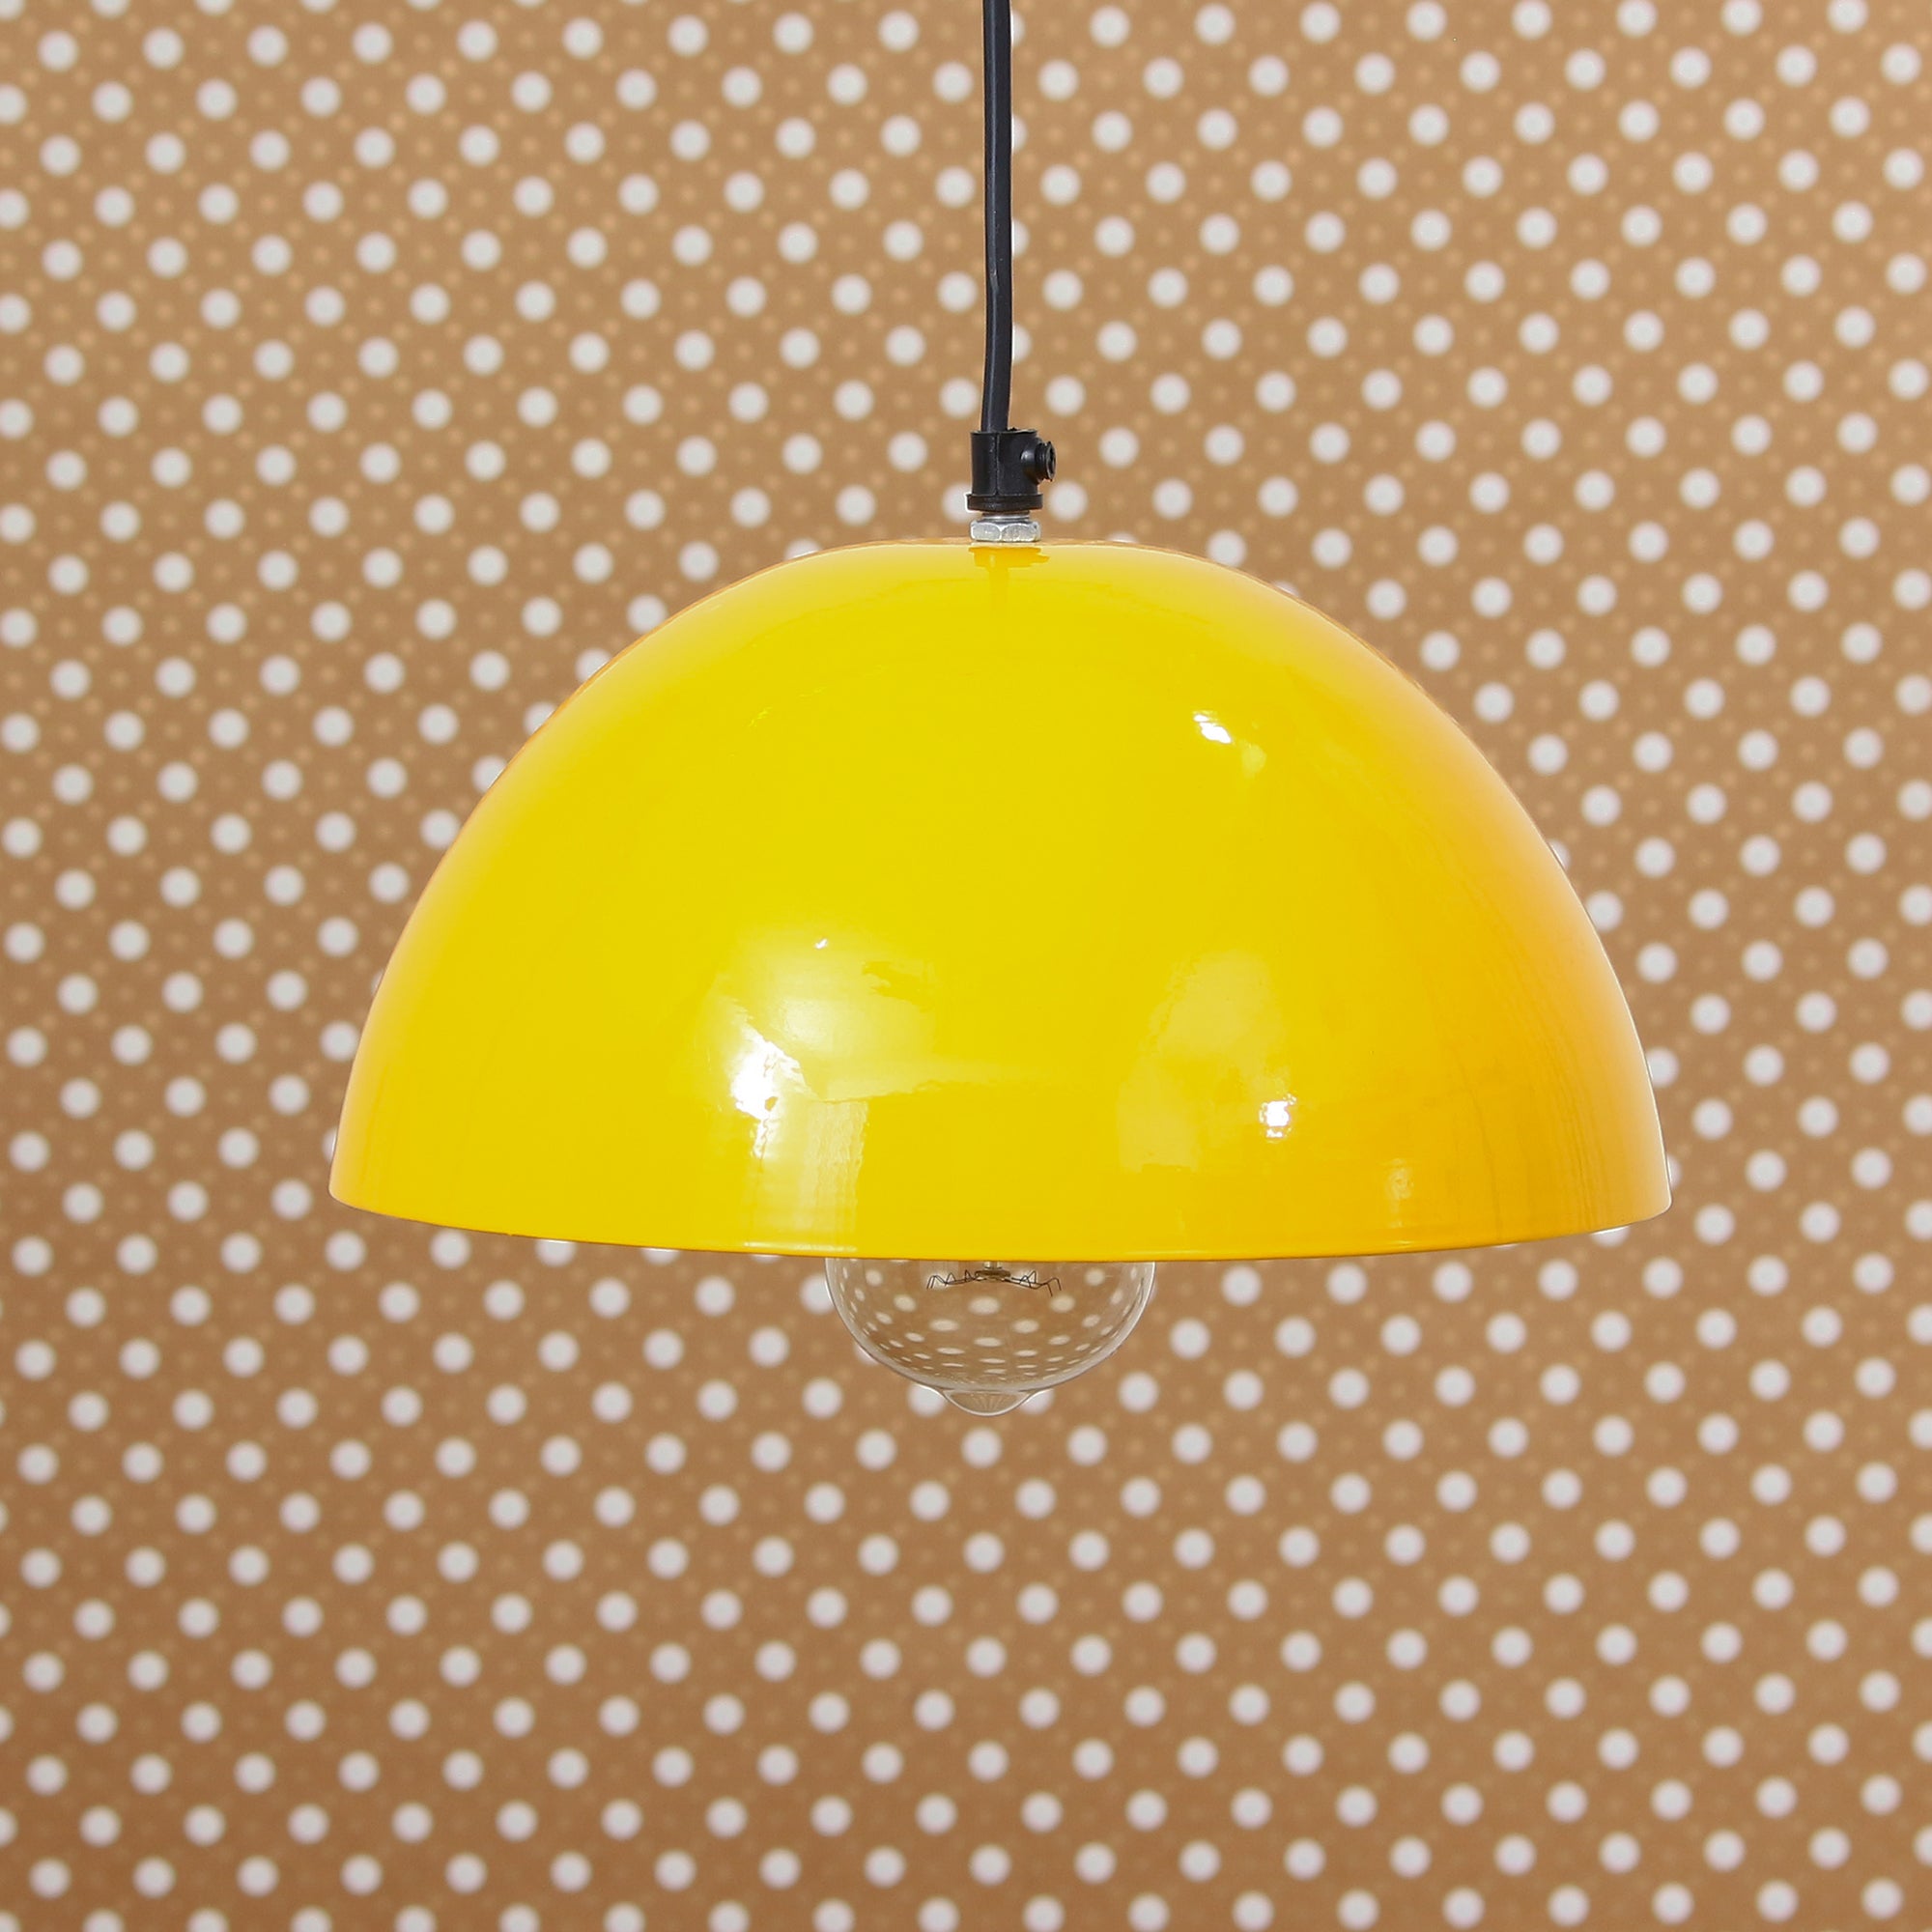 Shining Yellow Glossy Finish Pendant Light, 10" Diameter Ceiling Hanging Lamp for Home/Living Room/Offices/Restaurants